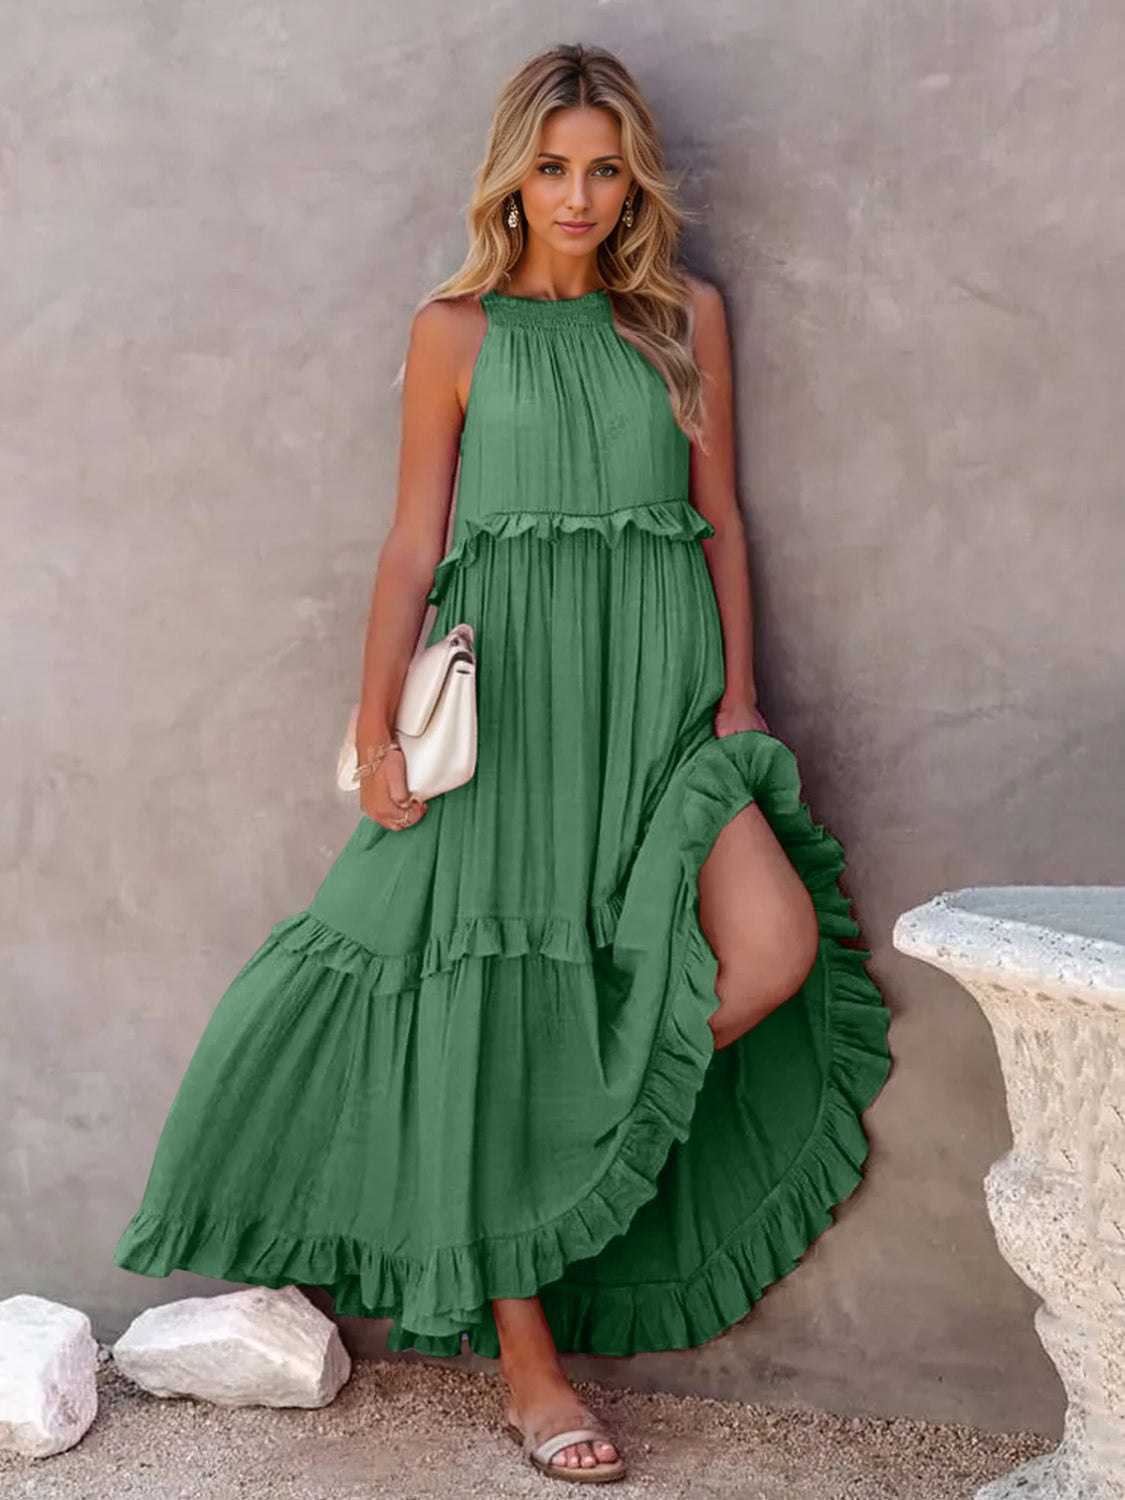 TEEK - Ruffled Sleeveless Tiered Pocketed Dress DRESS TEEK Trend Dark Green S 